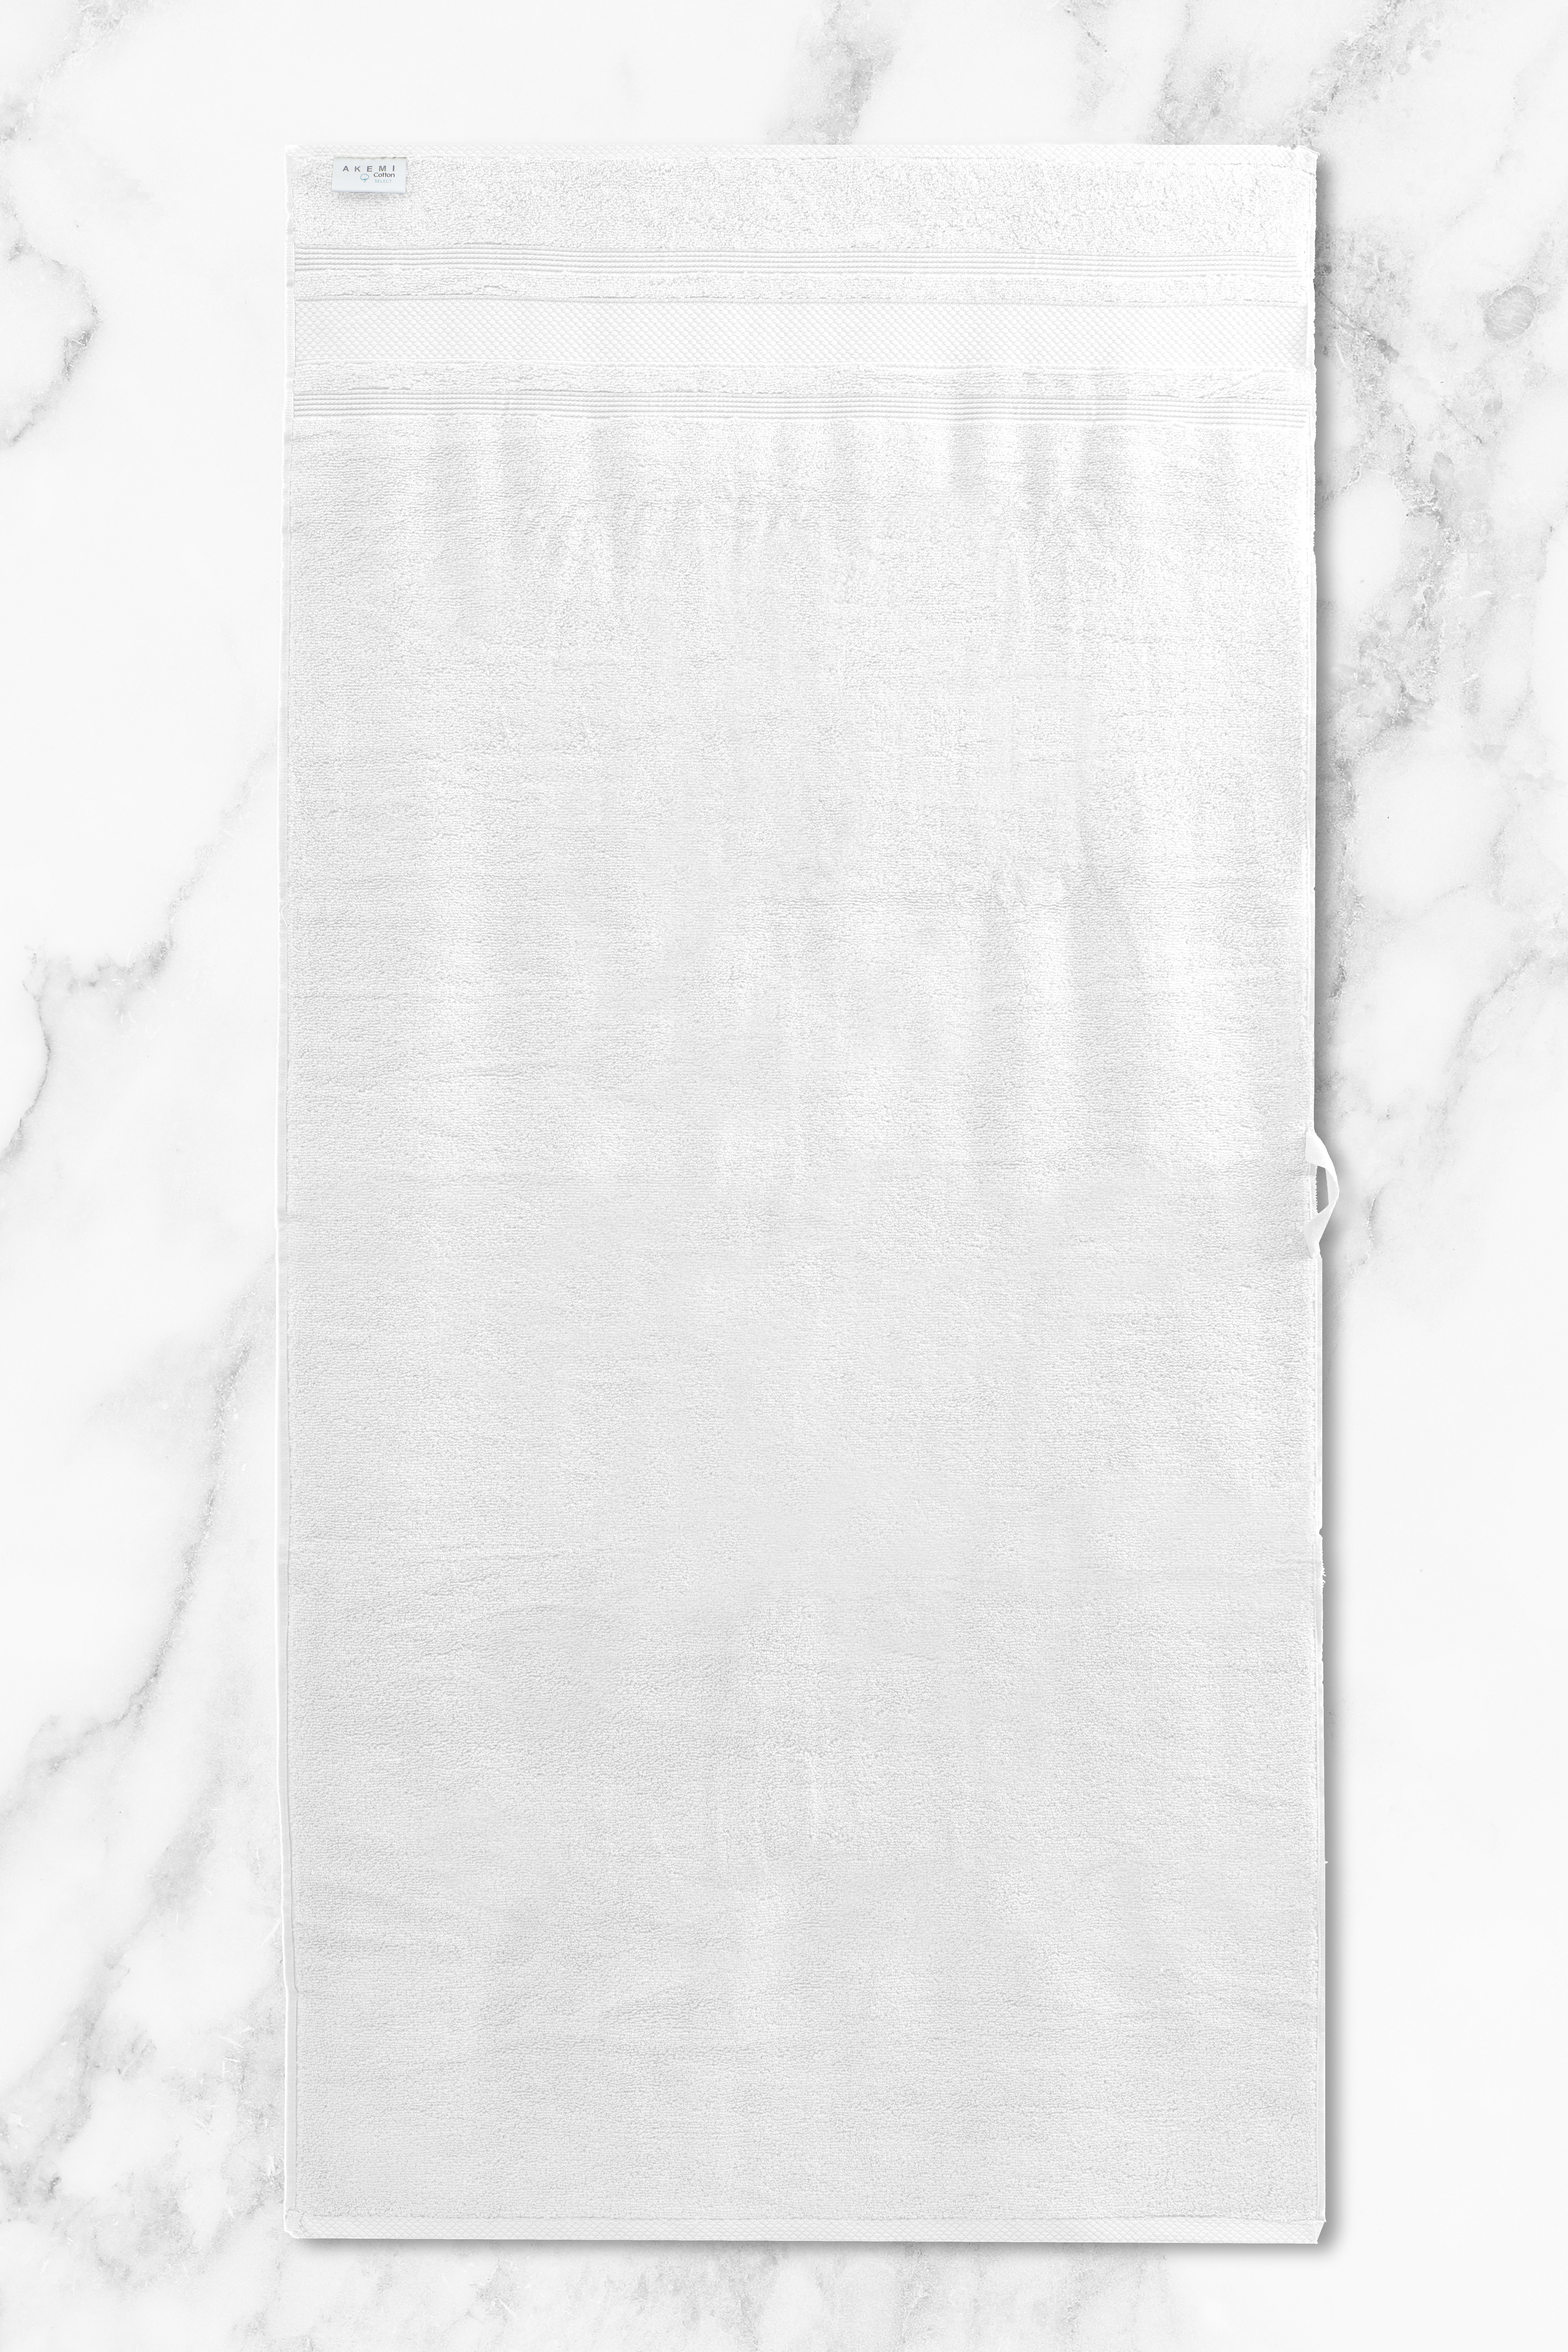 Khăn tay Akemi Ultra Absorbent Air-Loop Cotton 41cm x 76cm, 1 cái